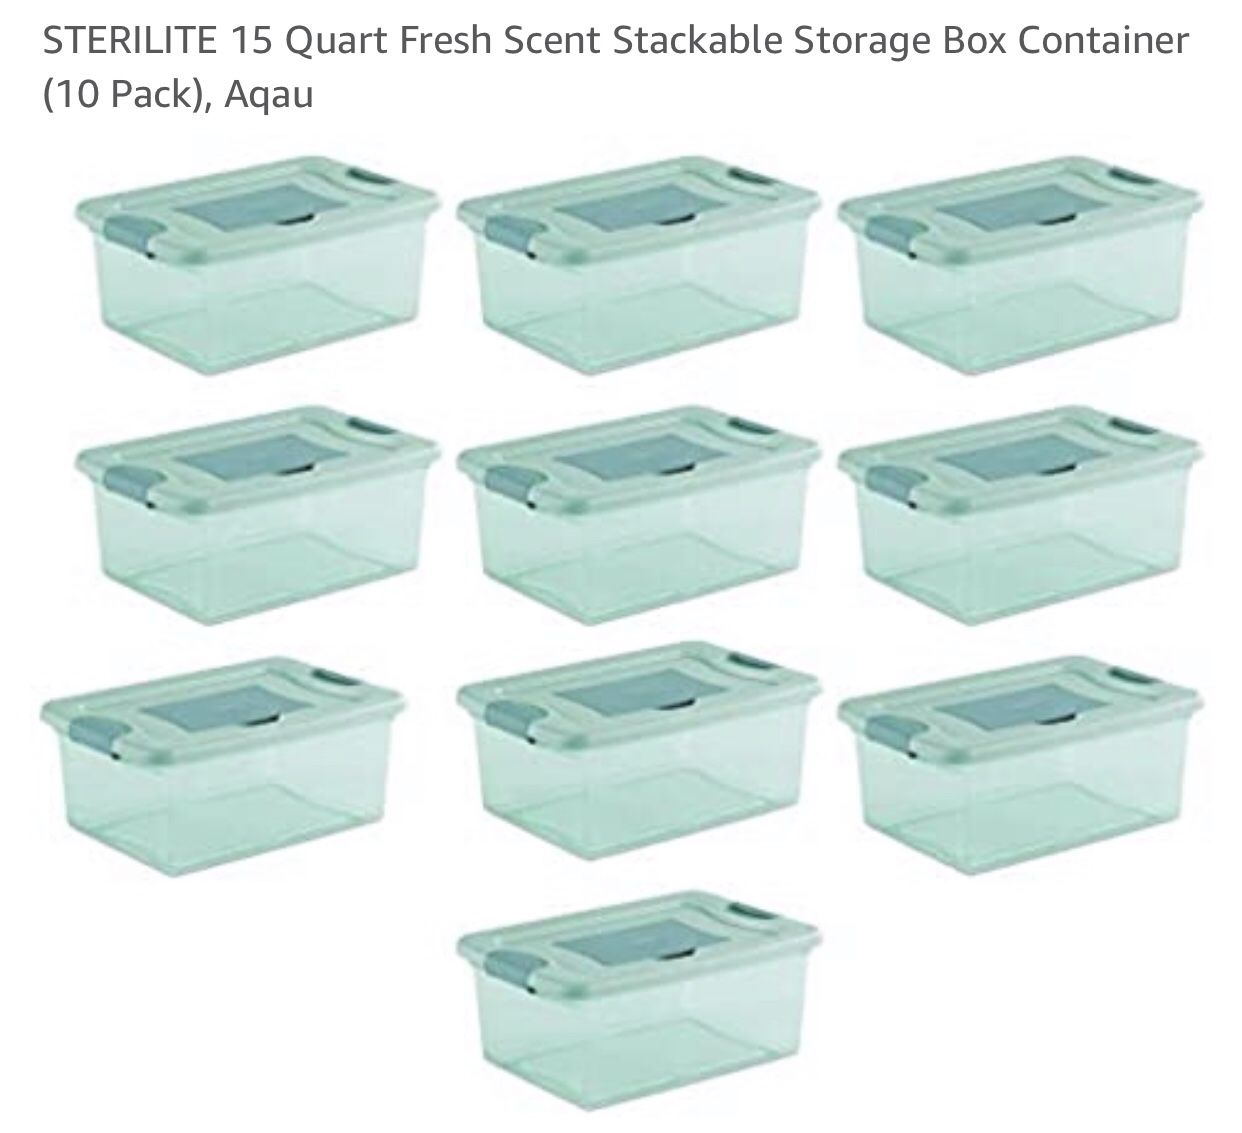 Sterilite 15 Quart Fresh Scent Stackable Storage Box Containers (10 ct.)